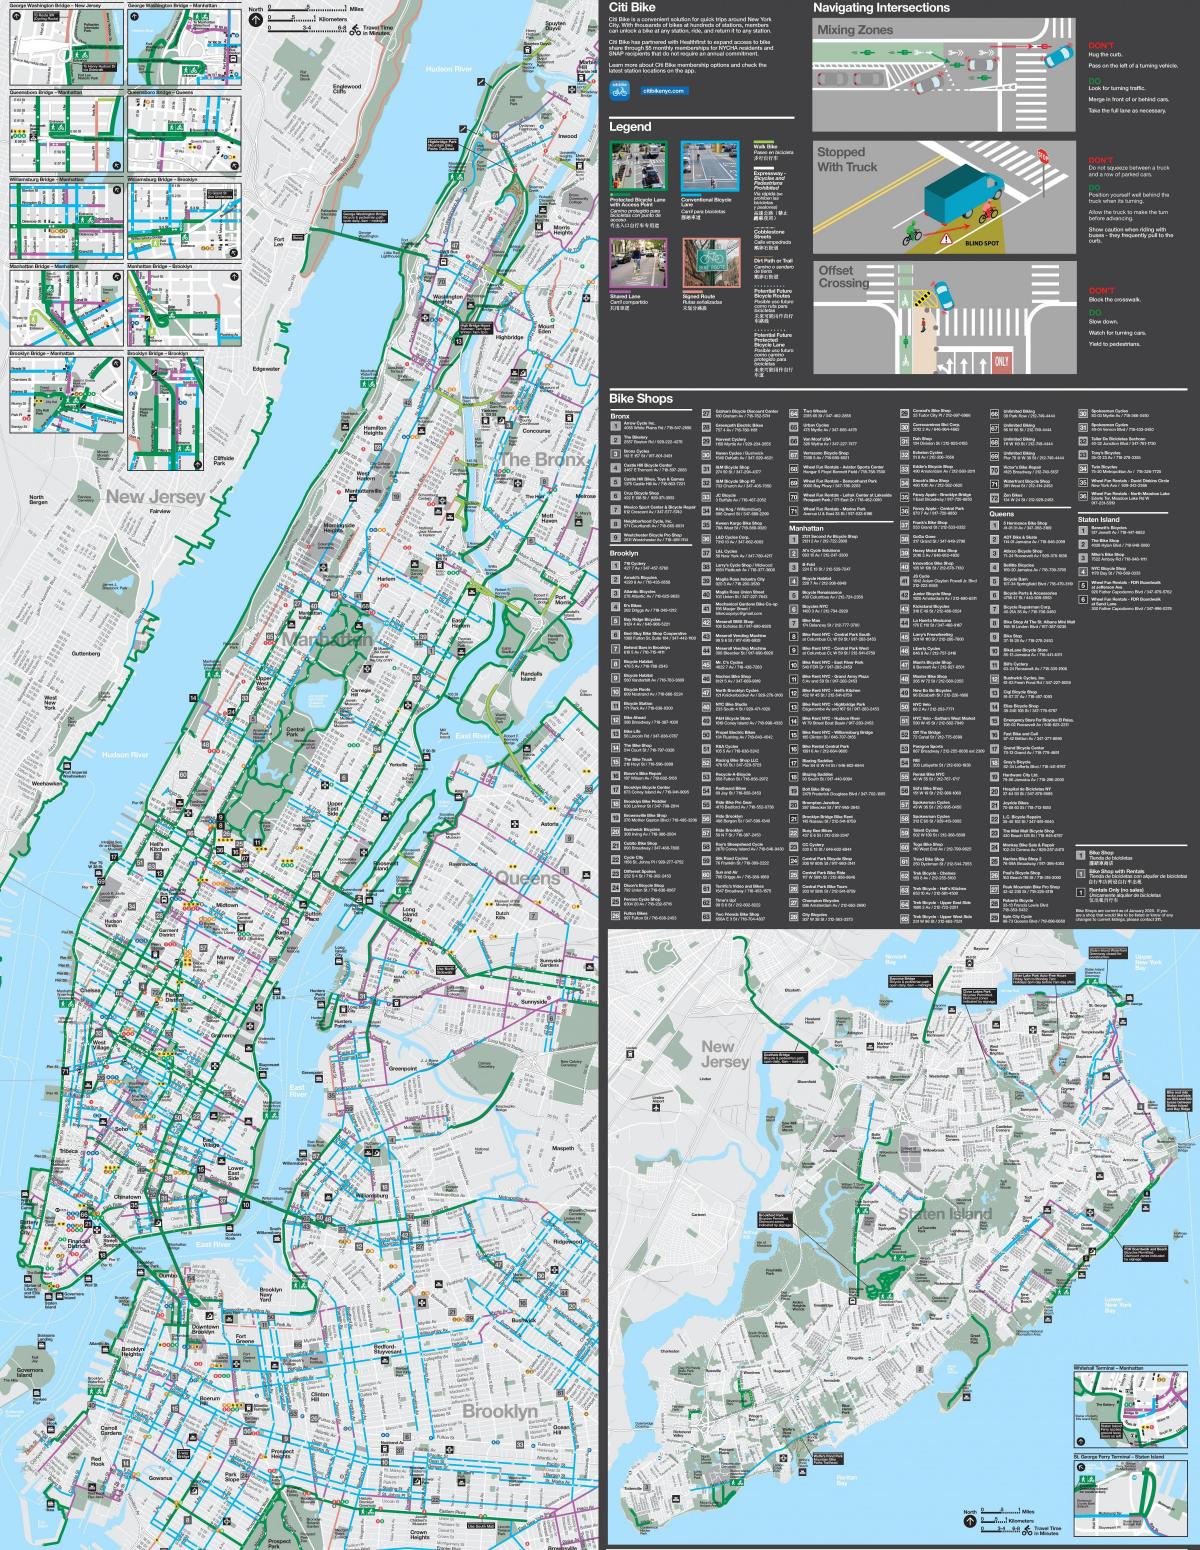 NYC carte des pistes cyclables